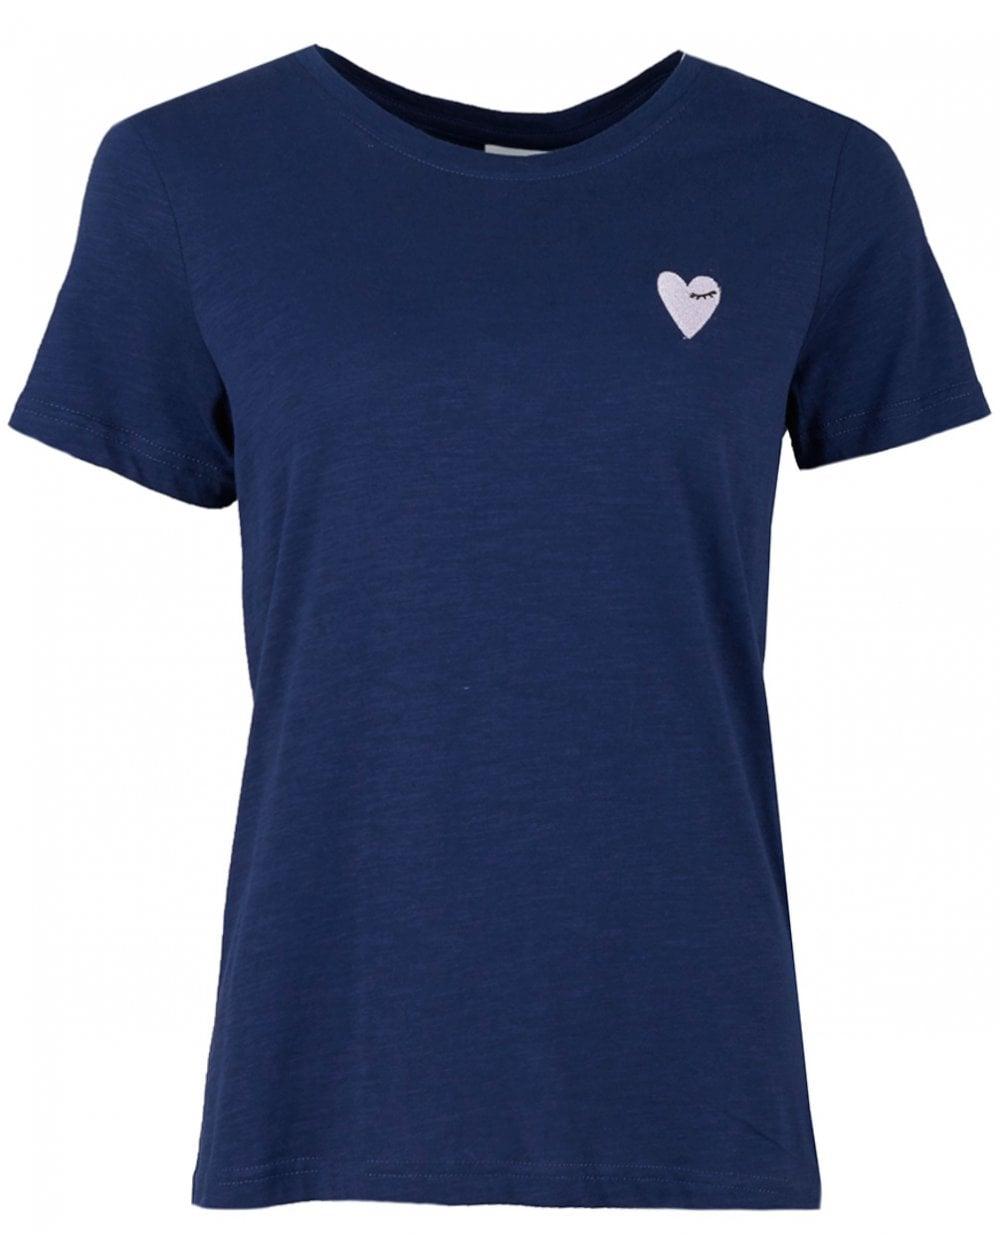 T and Heart Logo - Saint Tropez Heart Logo T-shirt - T-shirts from Psyche UK